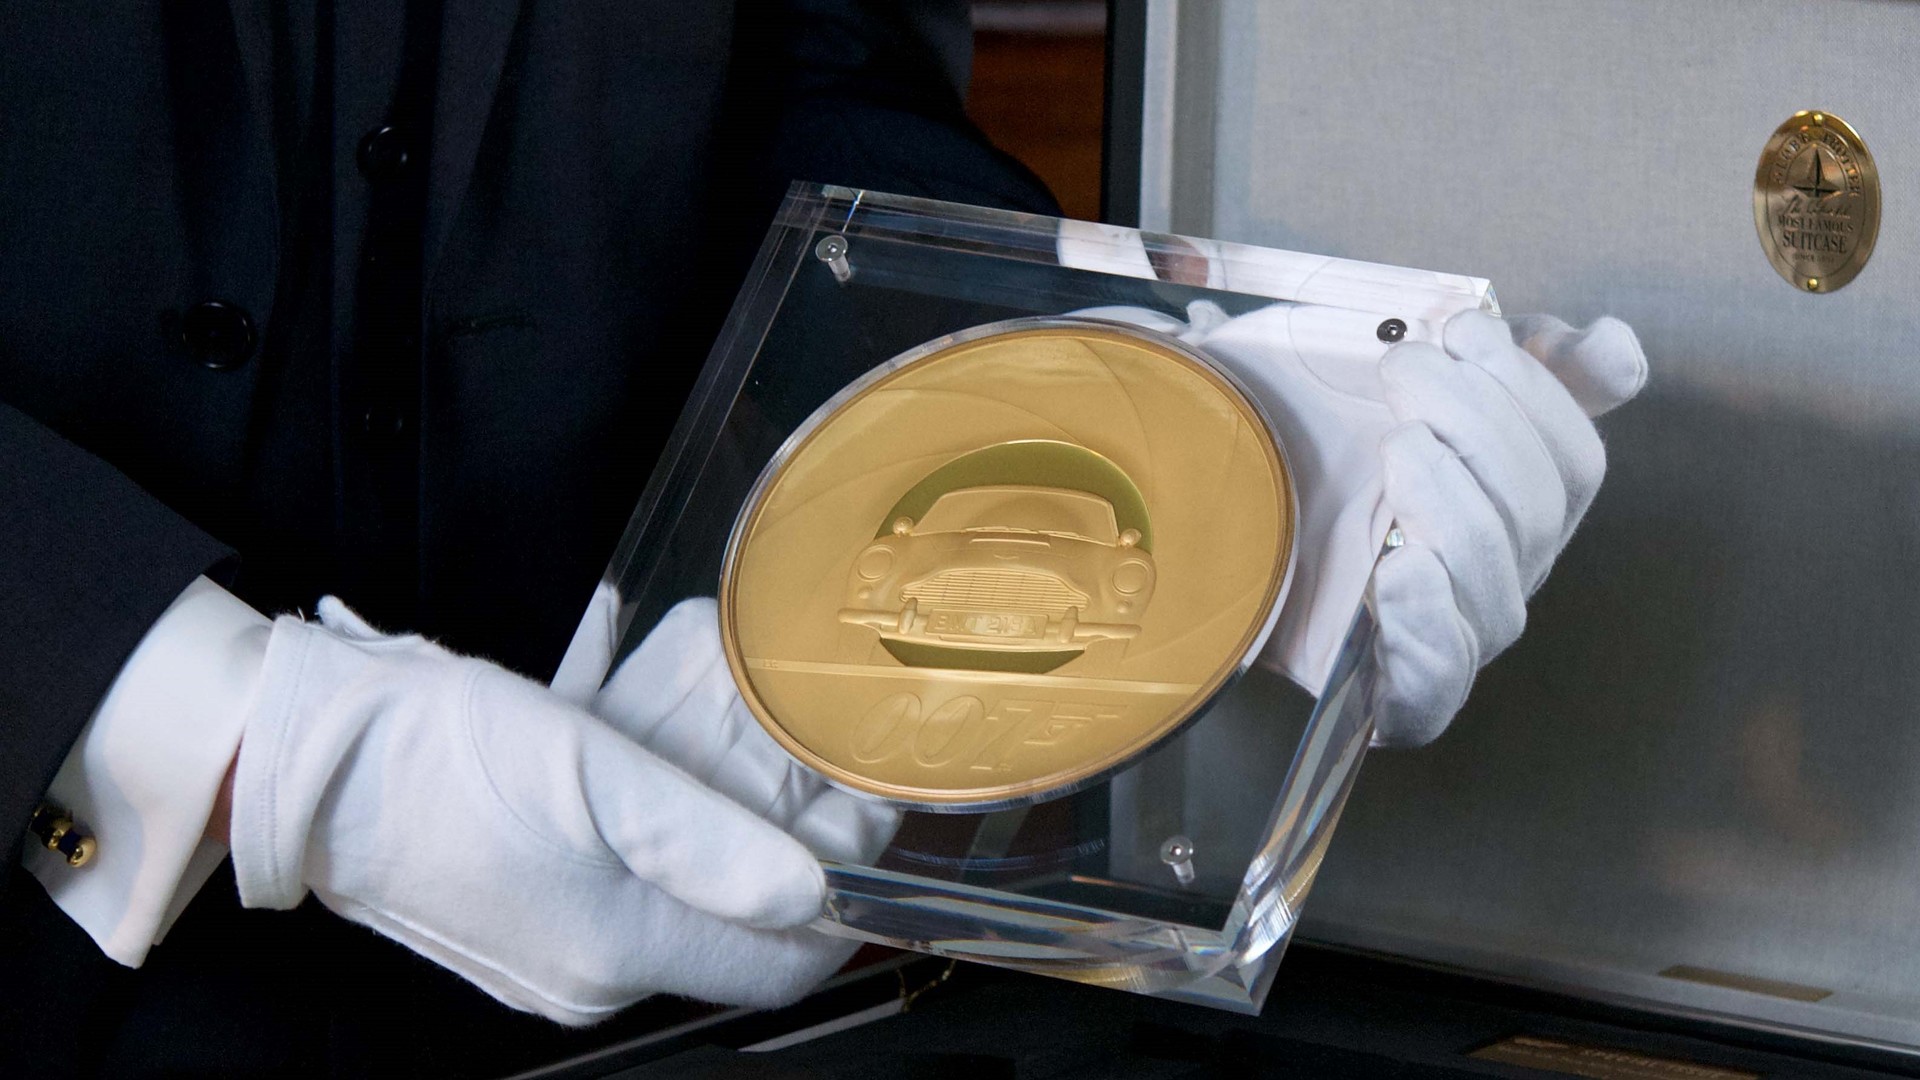 The 2020 James Bond 007 2 Kilo Gold Proof coin in its custom Globe-Trotter attaché case